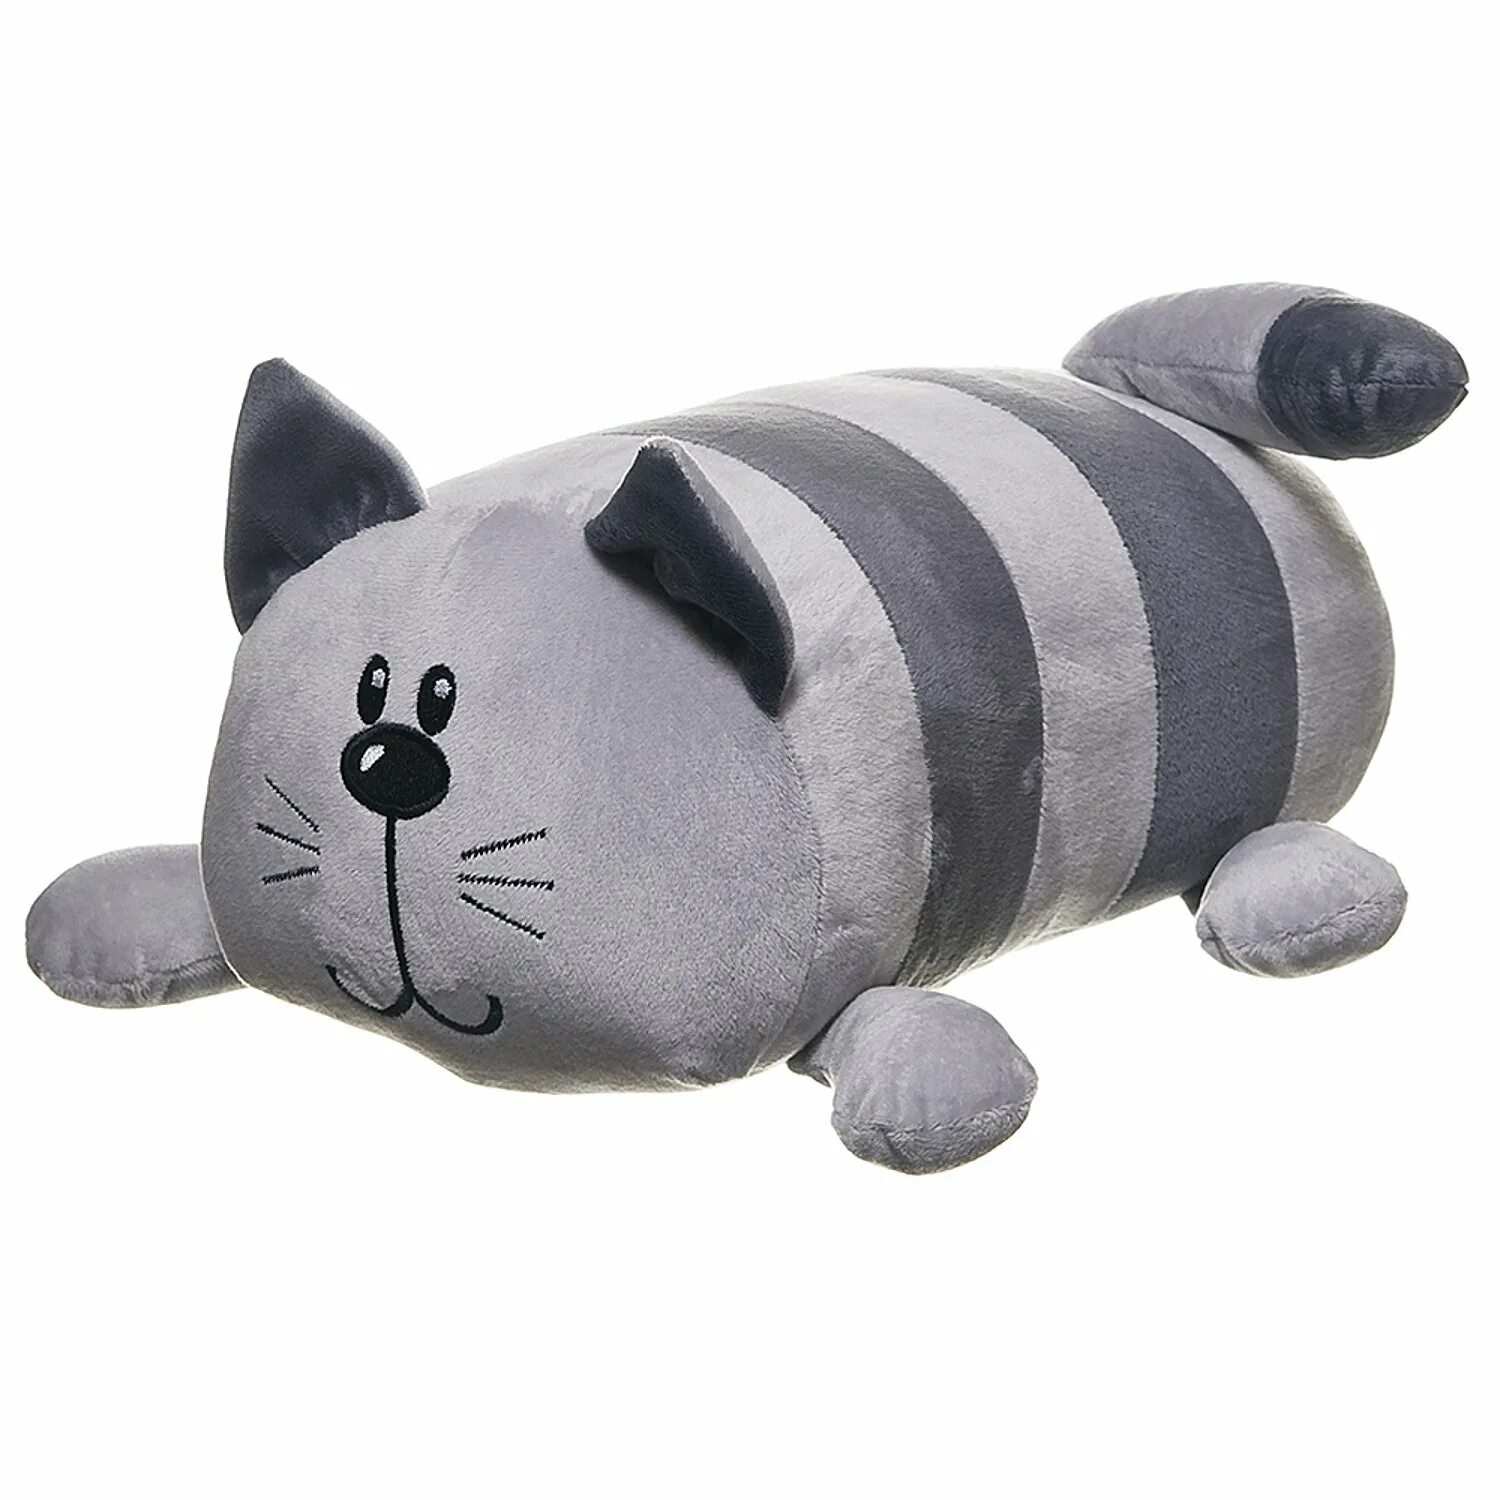 Кот батон мягкая игрушка. Мягкая игрушка подушка кот батон. Плюшевый кот подушка. Антистресс подушка кот батон. Кот валик подушка.